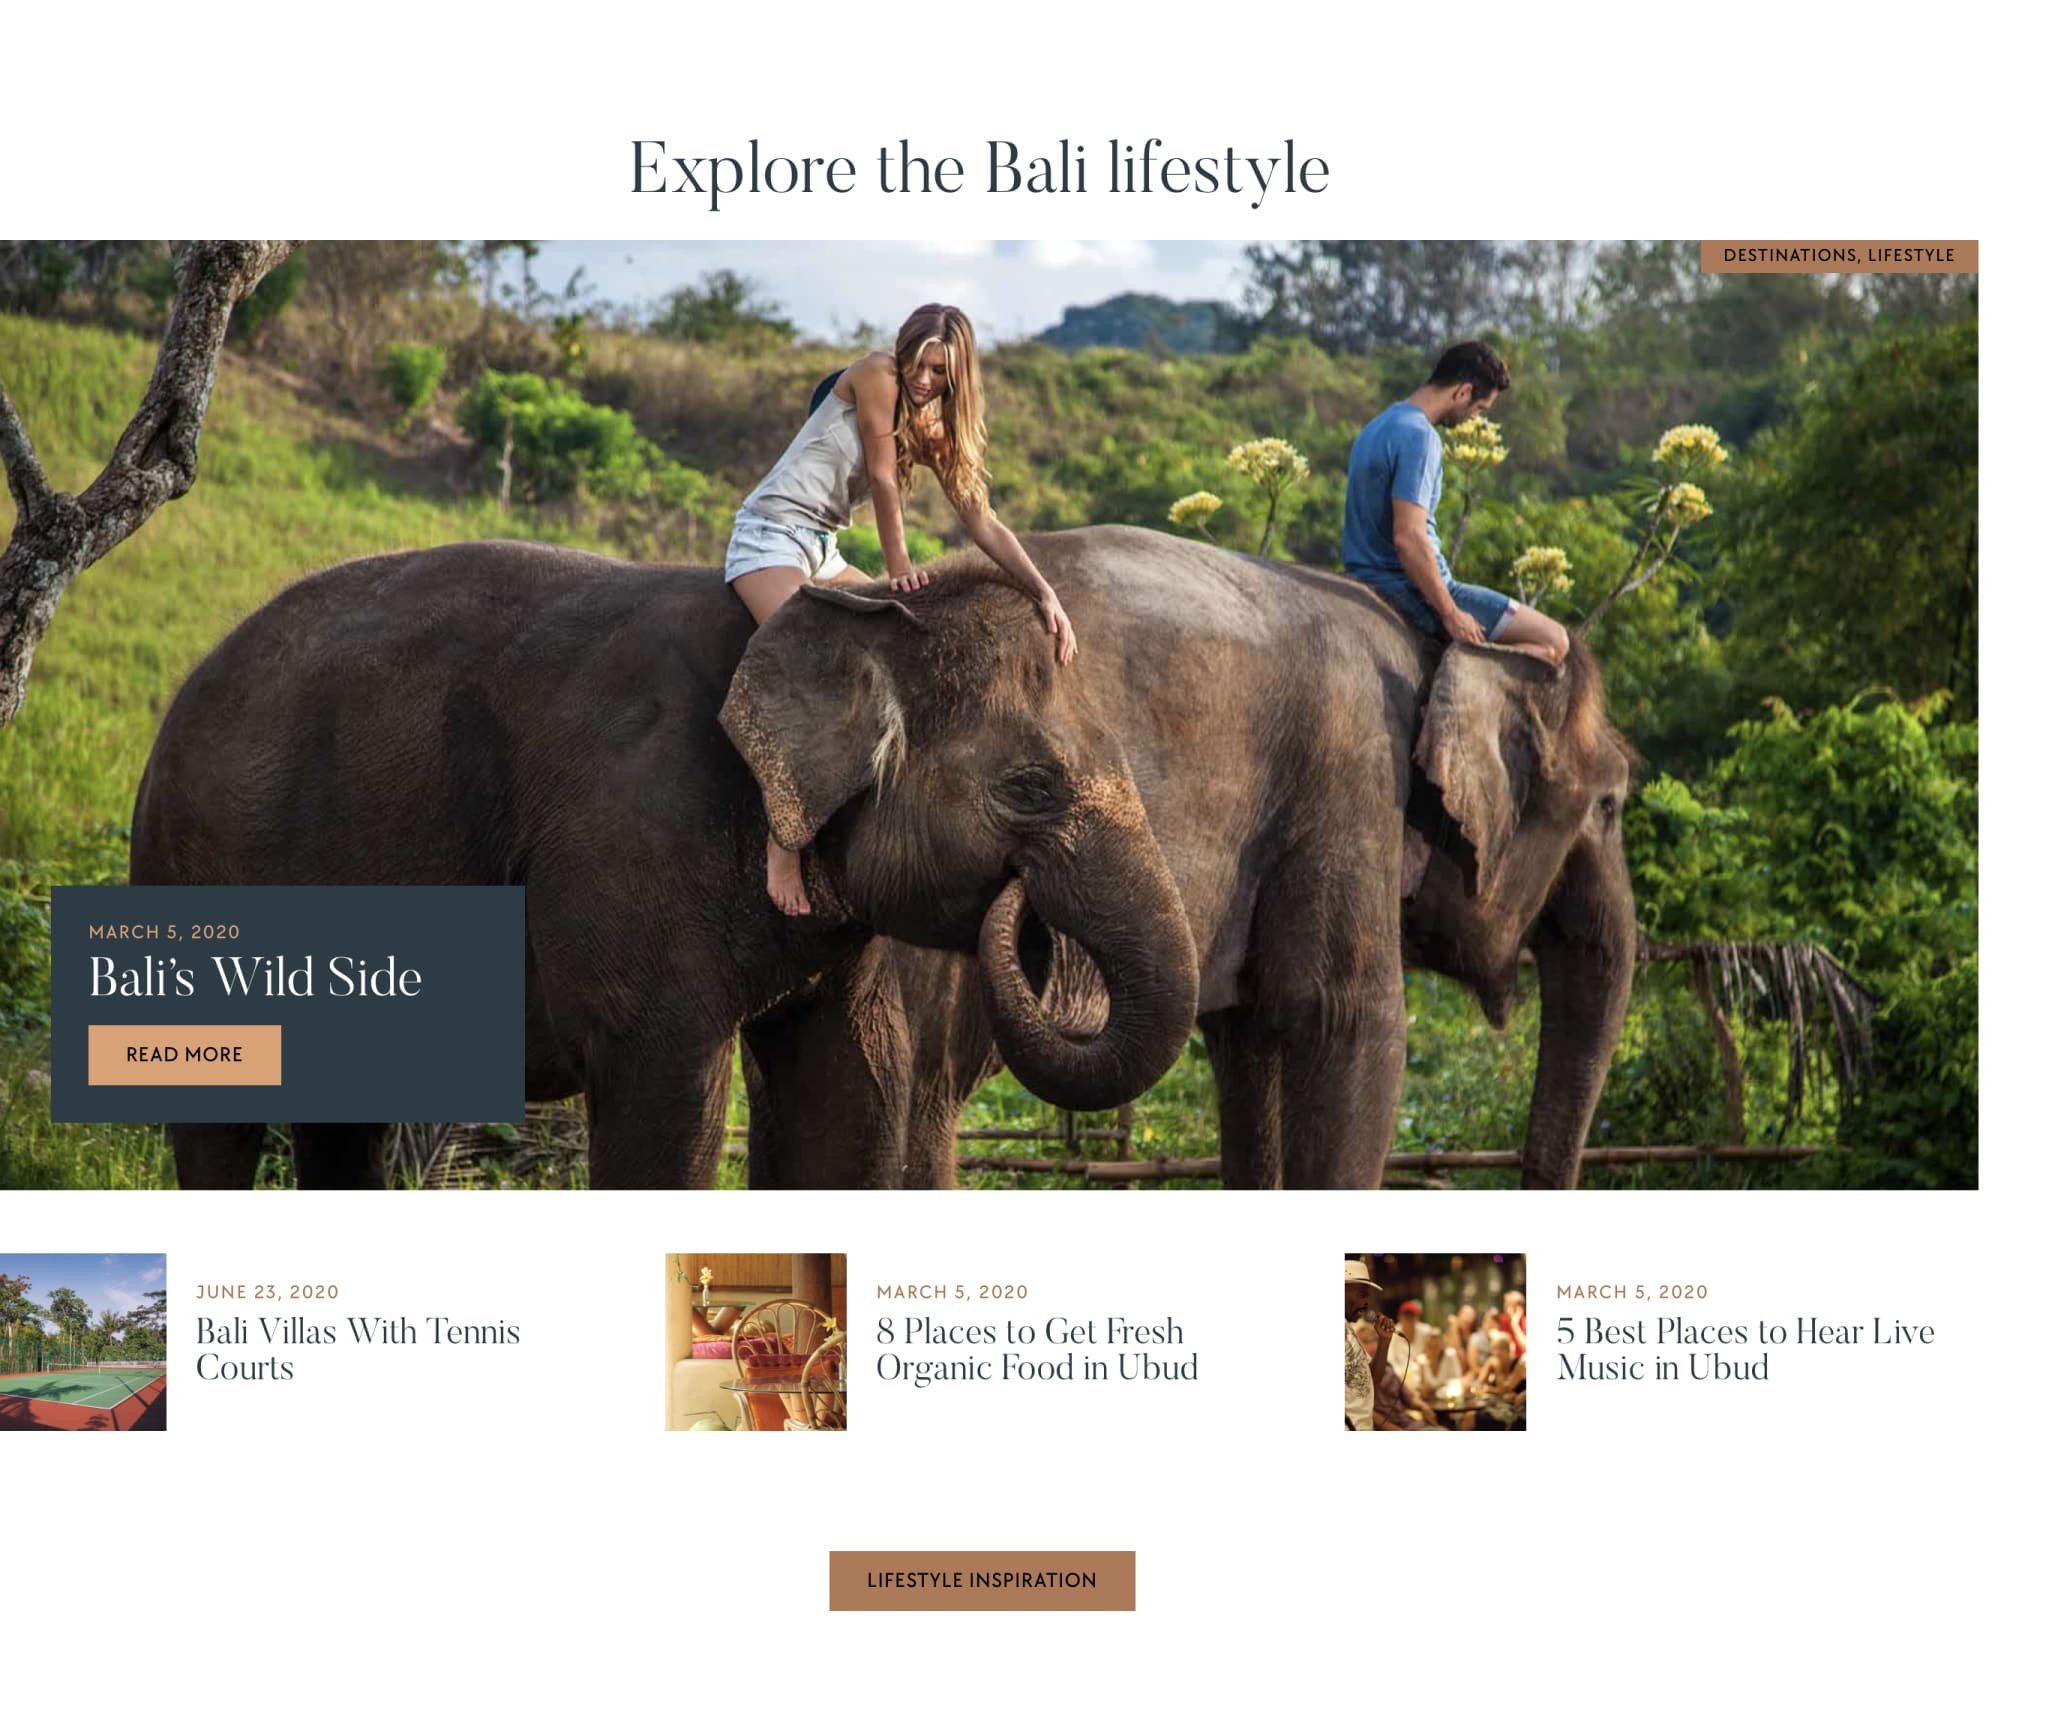 The travel blog on Ulitmate Bali